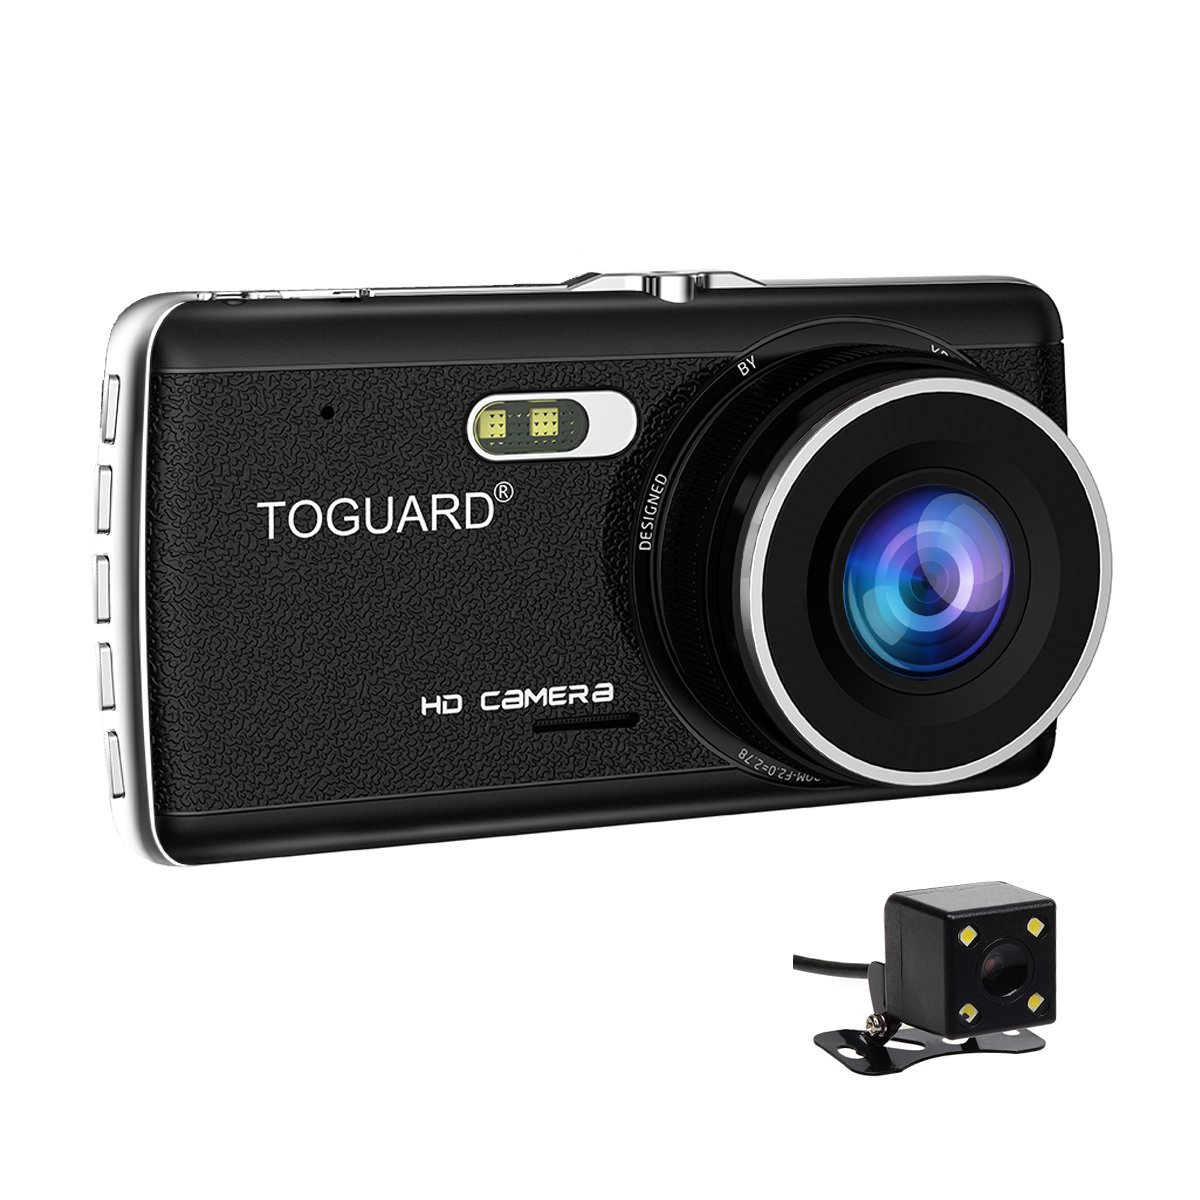 TOGUARD Dual Lens Dash Cam front and rear recording ATST, Night Vision,4.0'' IPS Screen,HD 1080P Car Dash Camera, Rearview Backup Camera,170 Degree Wide Angle, WDR, Loop Recording, G-sensor, Parking monitor 1